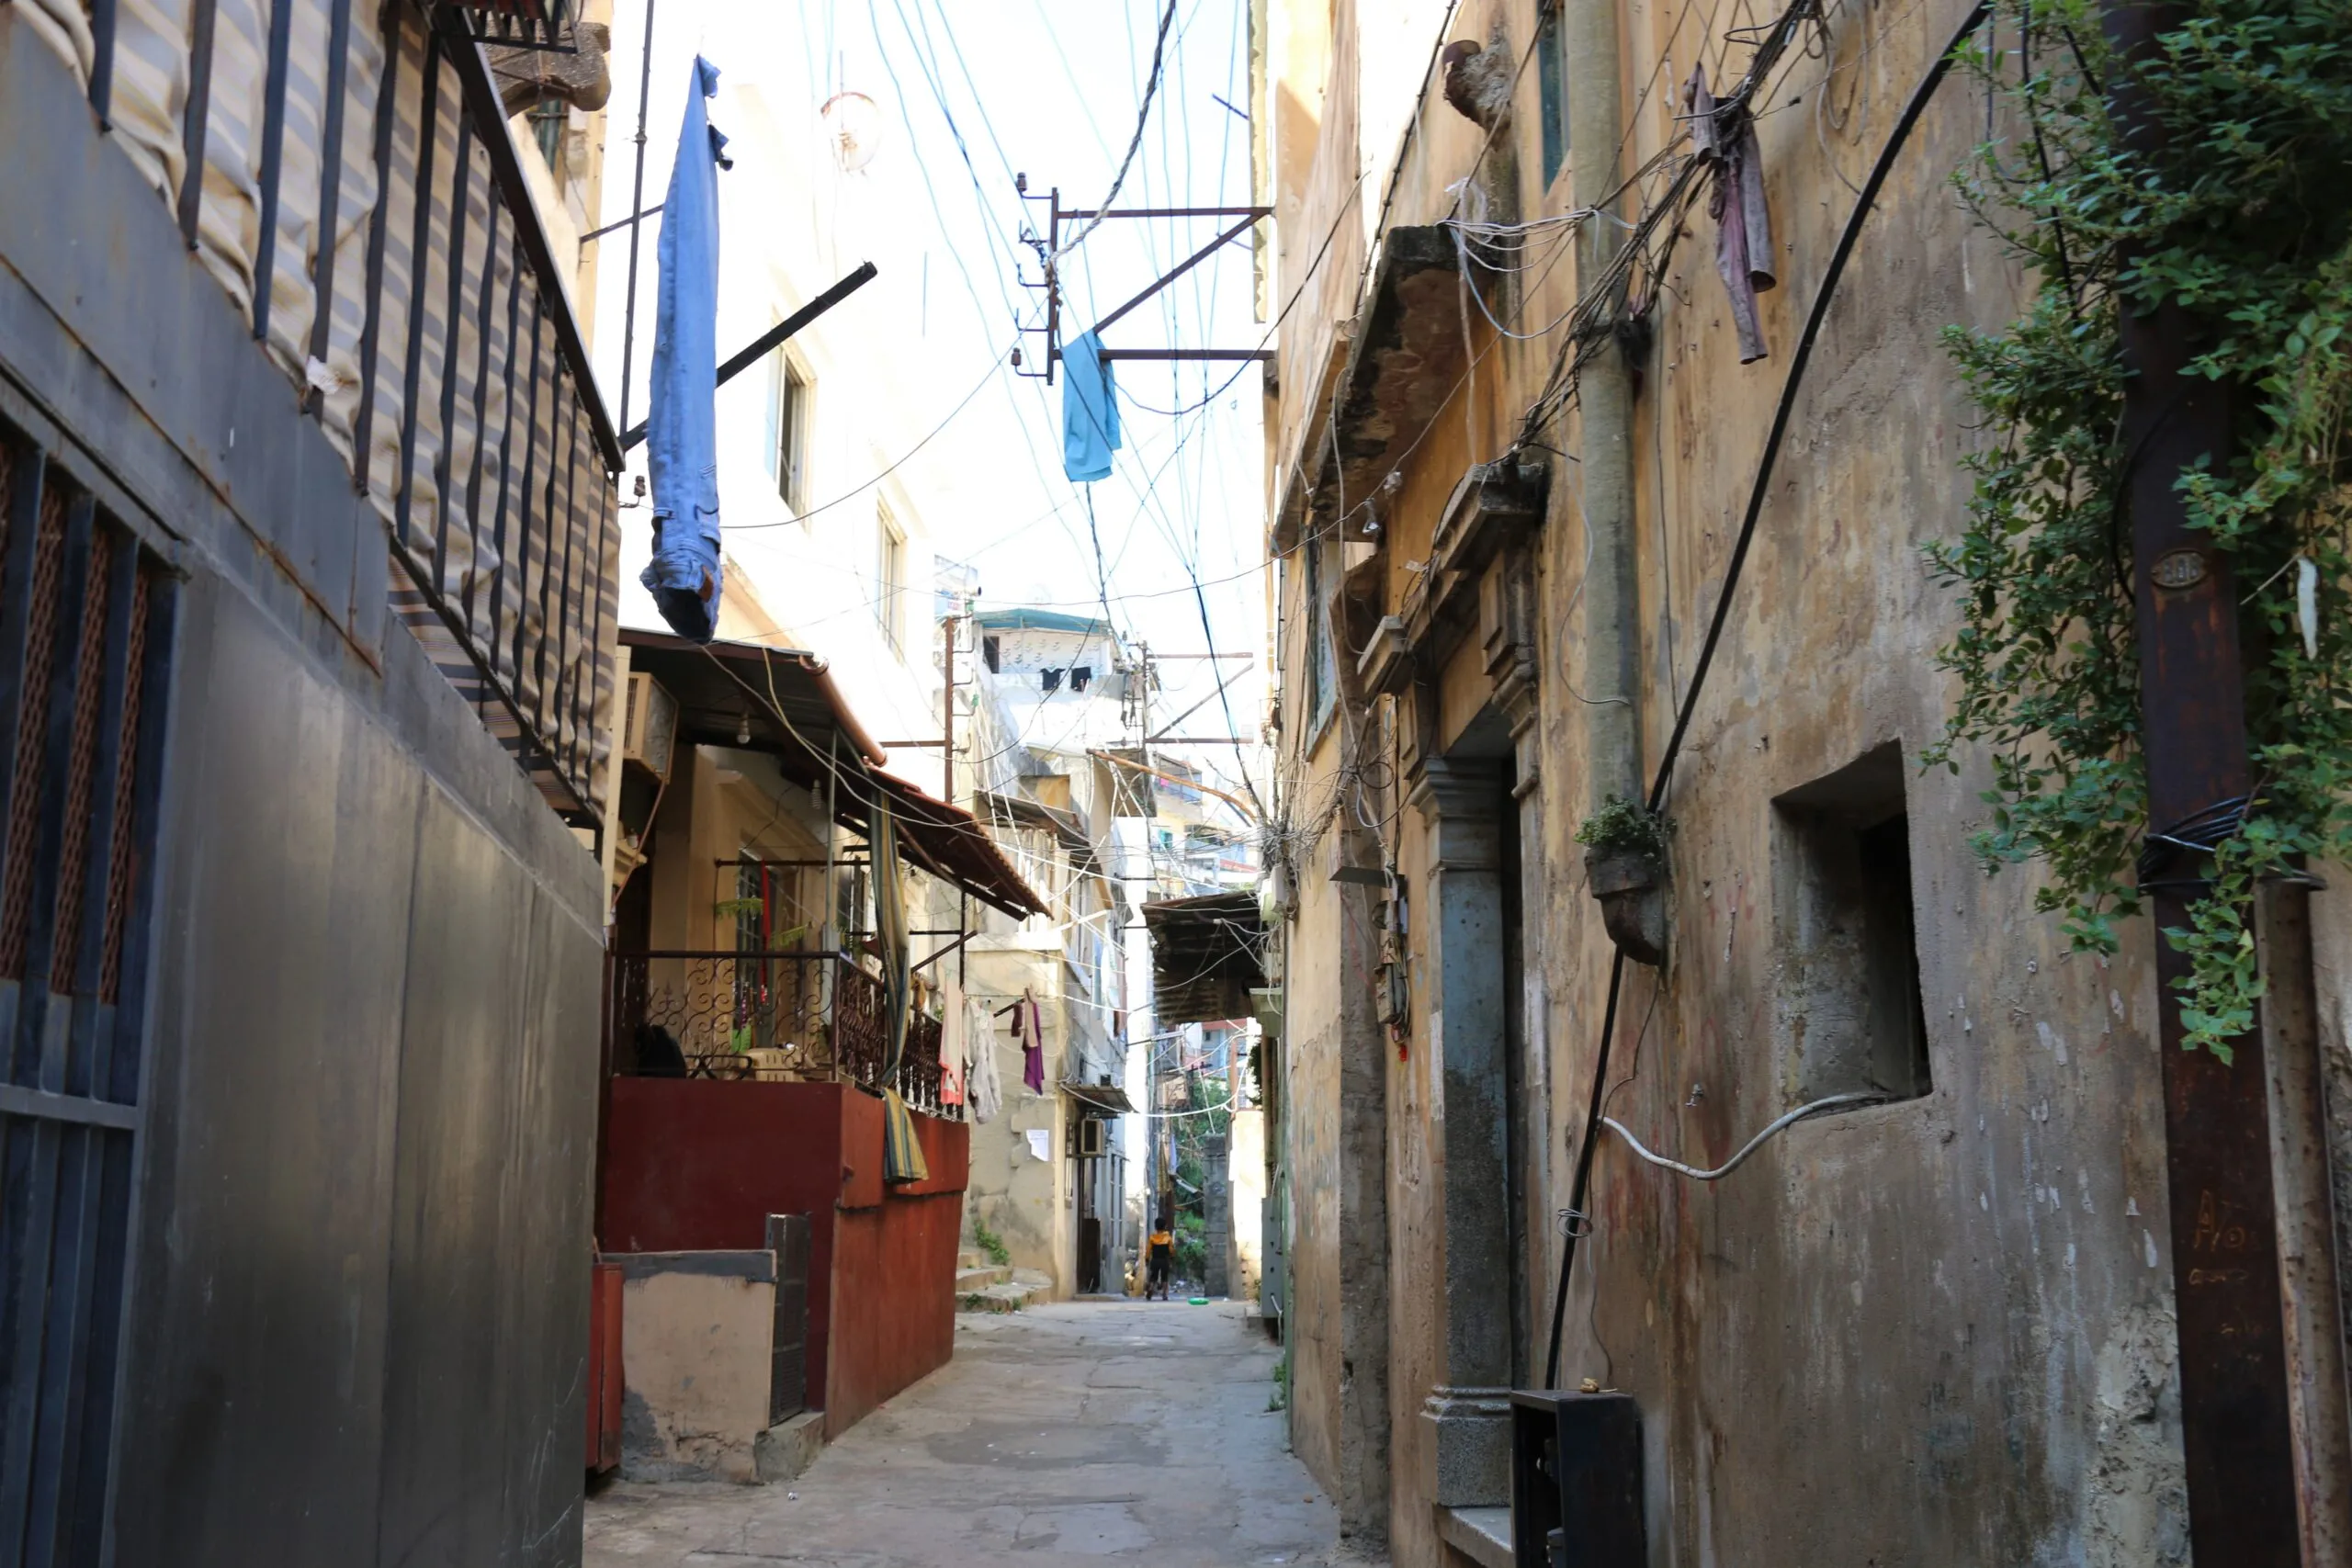 Narrow streetscape in Tripoli.